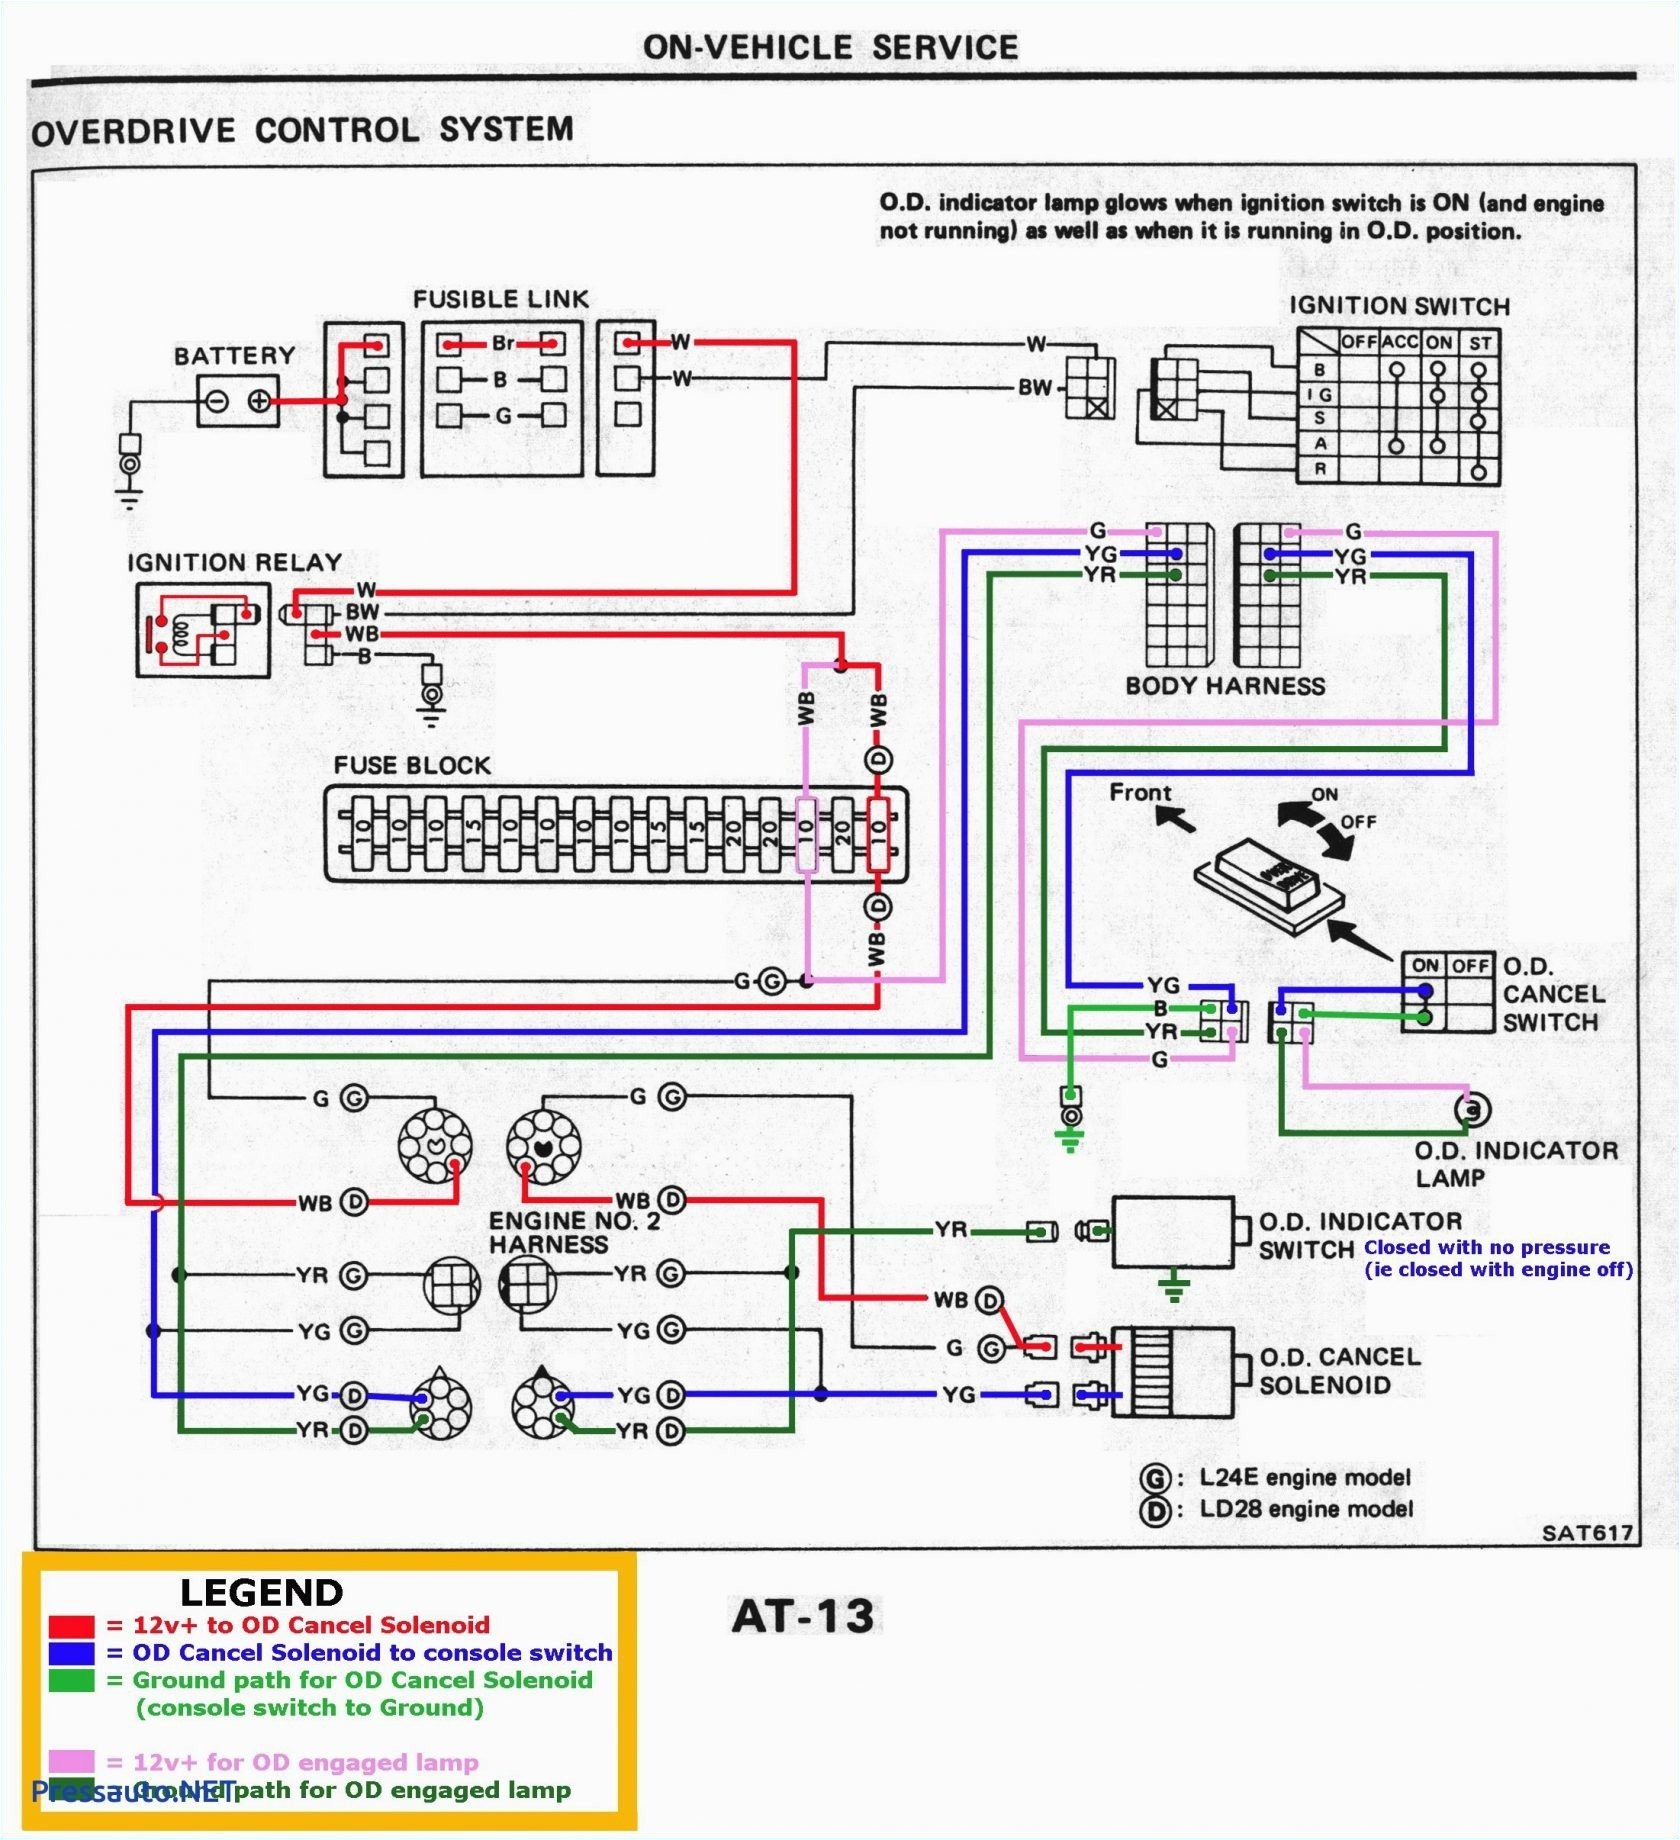 kenmore washing machine diagram related keywords suggestions free download wiring diagram rg related keywords suggestions kenmore